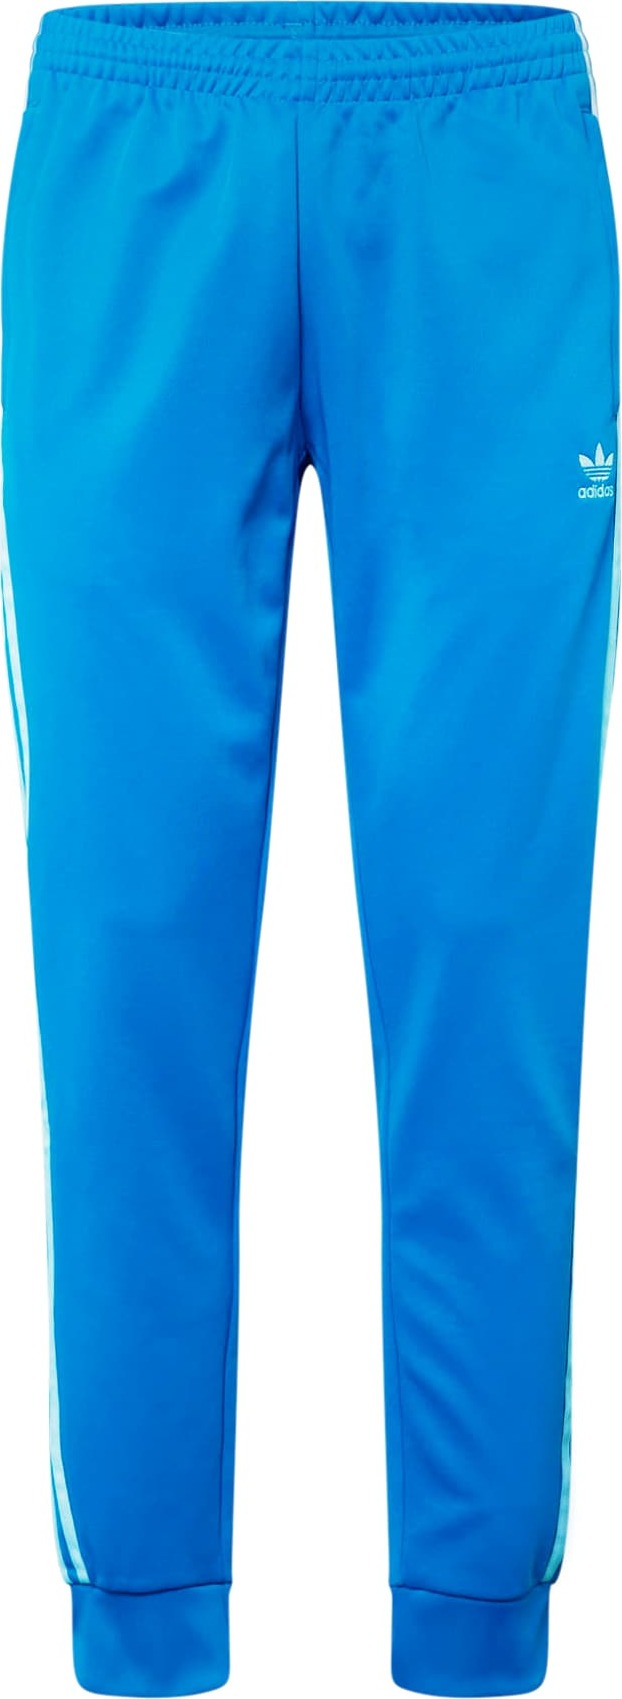 Kalhoty 'Adicolor Classics Sst' adidas Originals azurová modrá / bílá